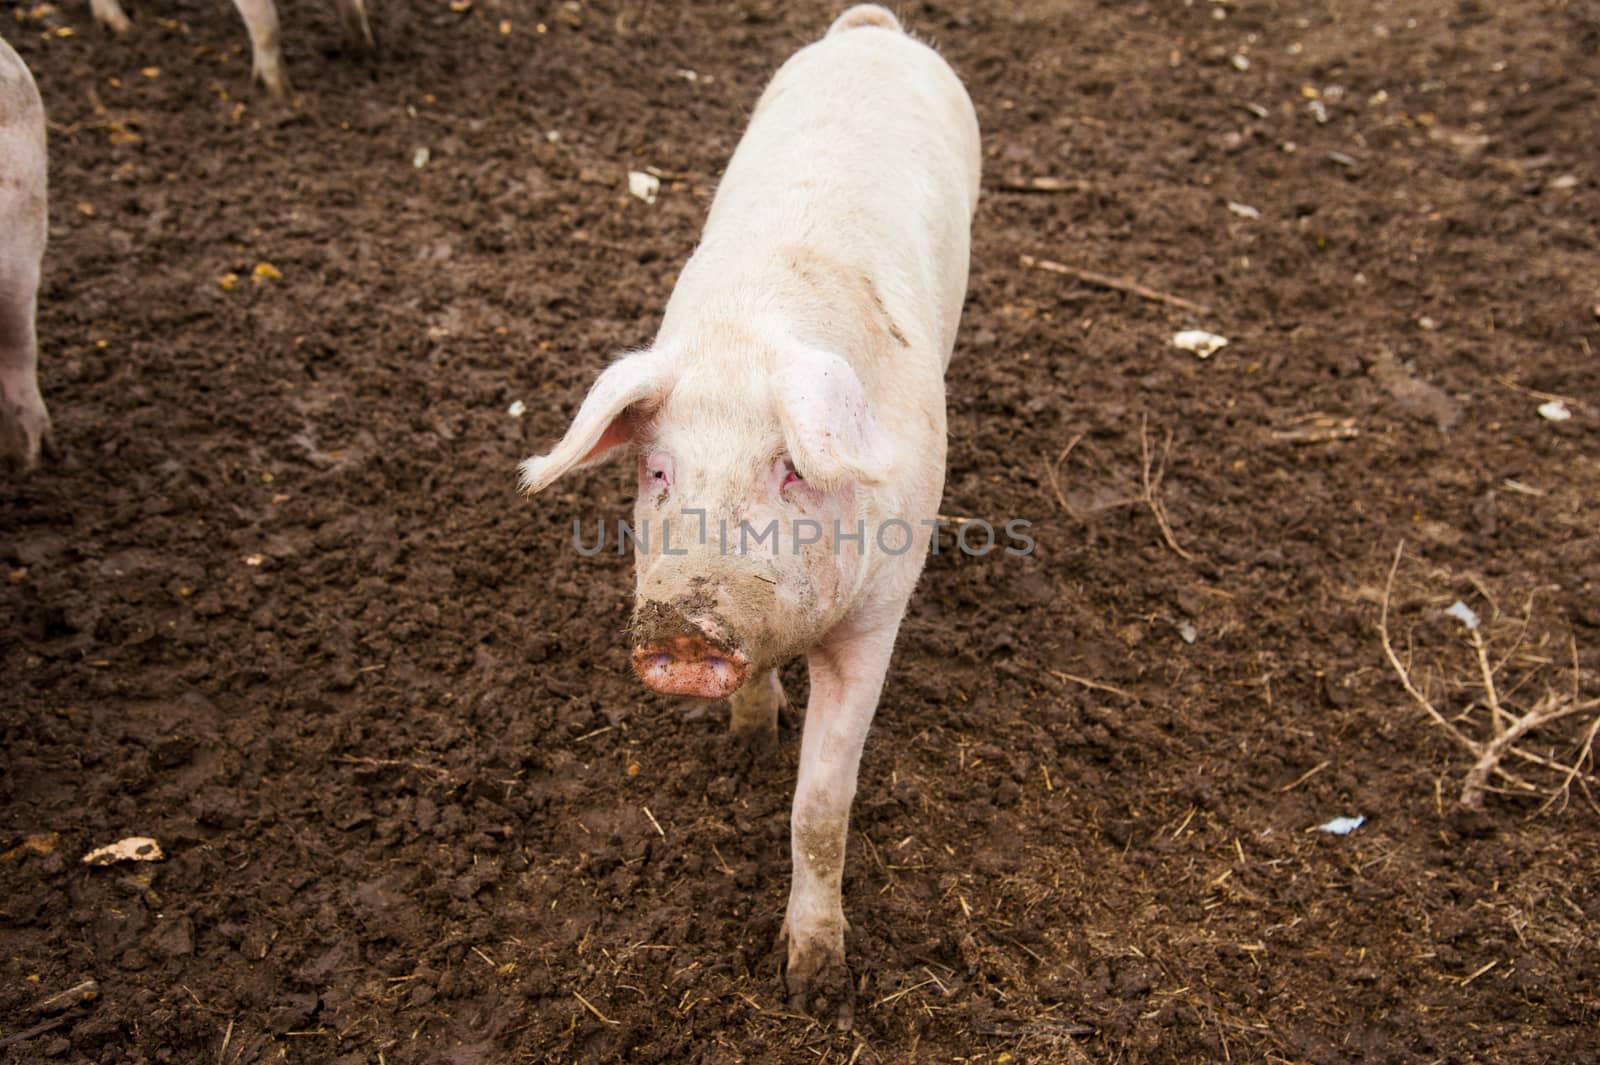 Domestic pigs on a farm by grigorenko